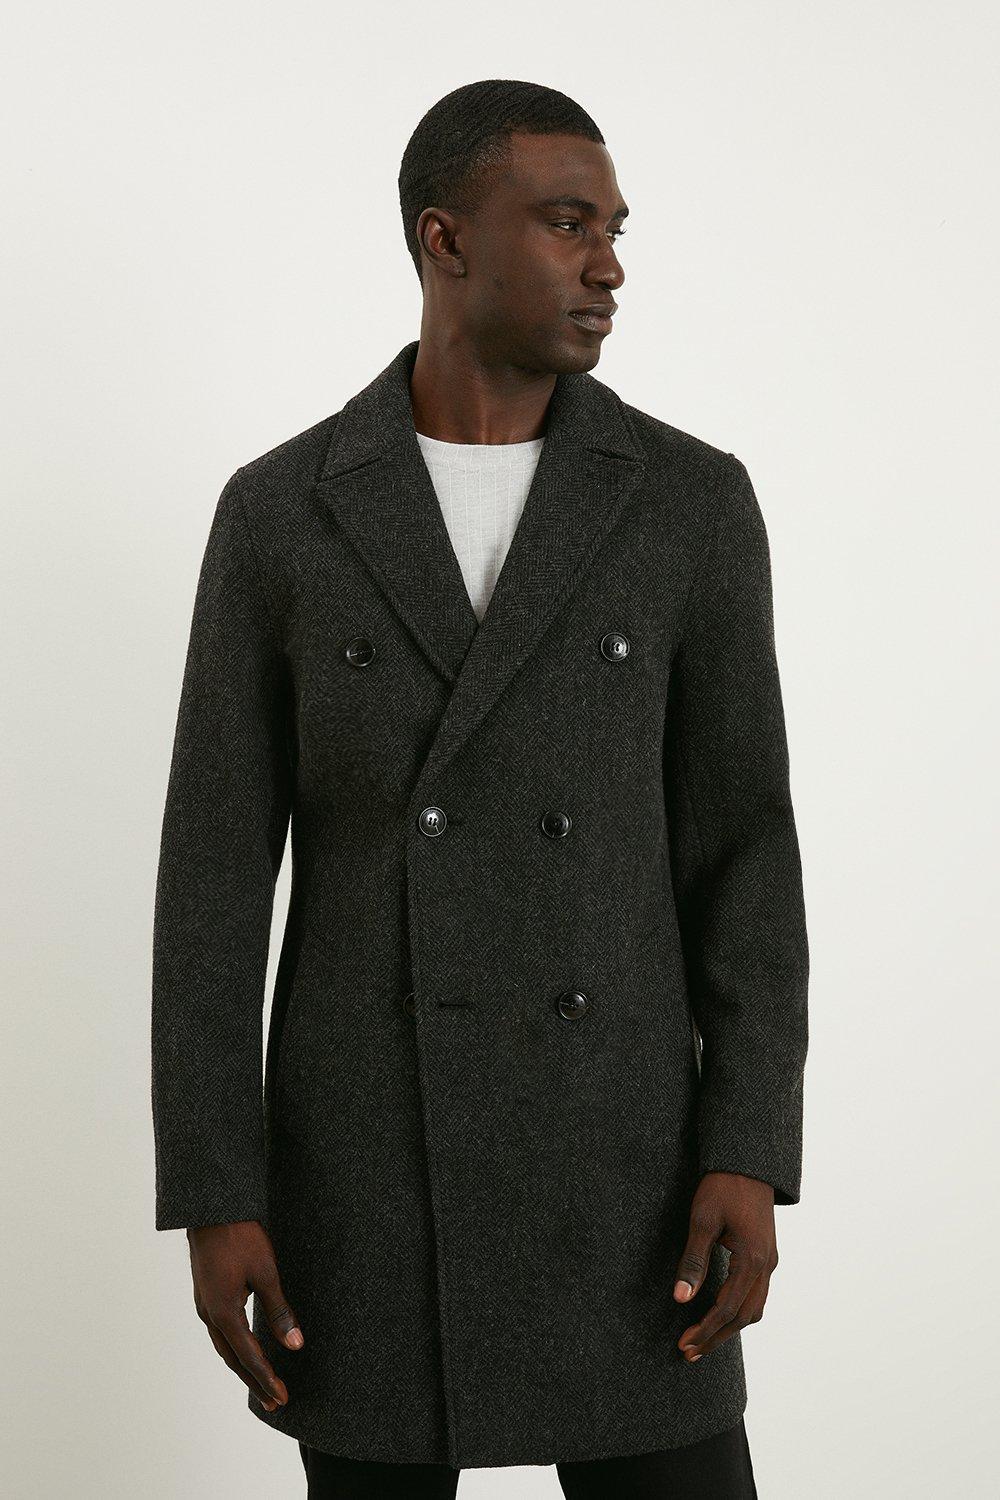 Jackets & Coats, Double Breasted Wool Coat